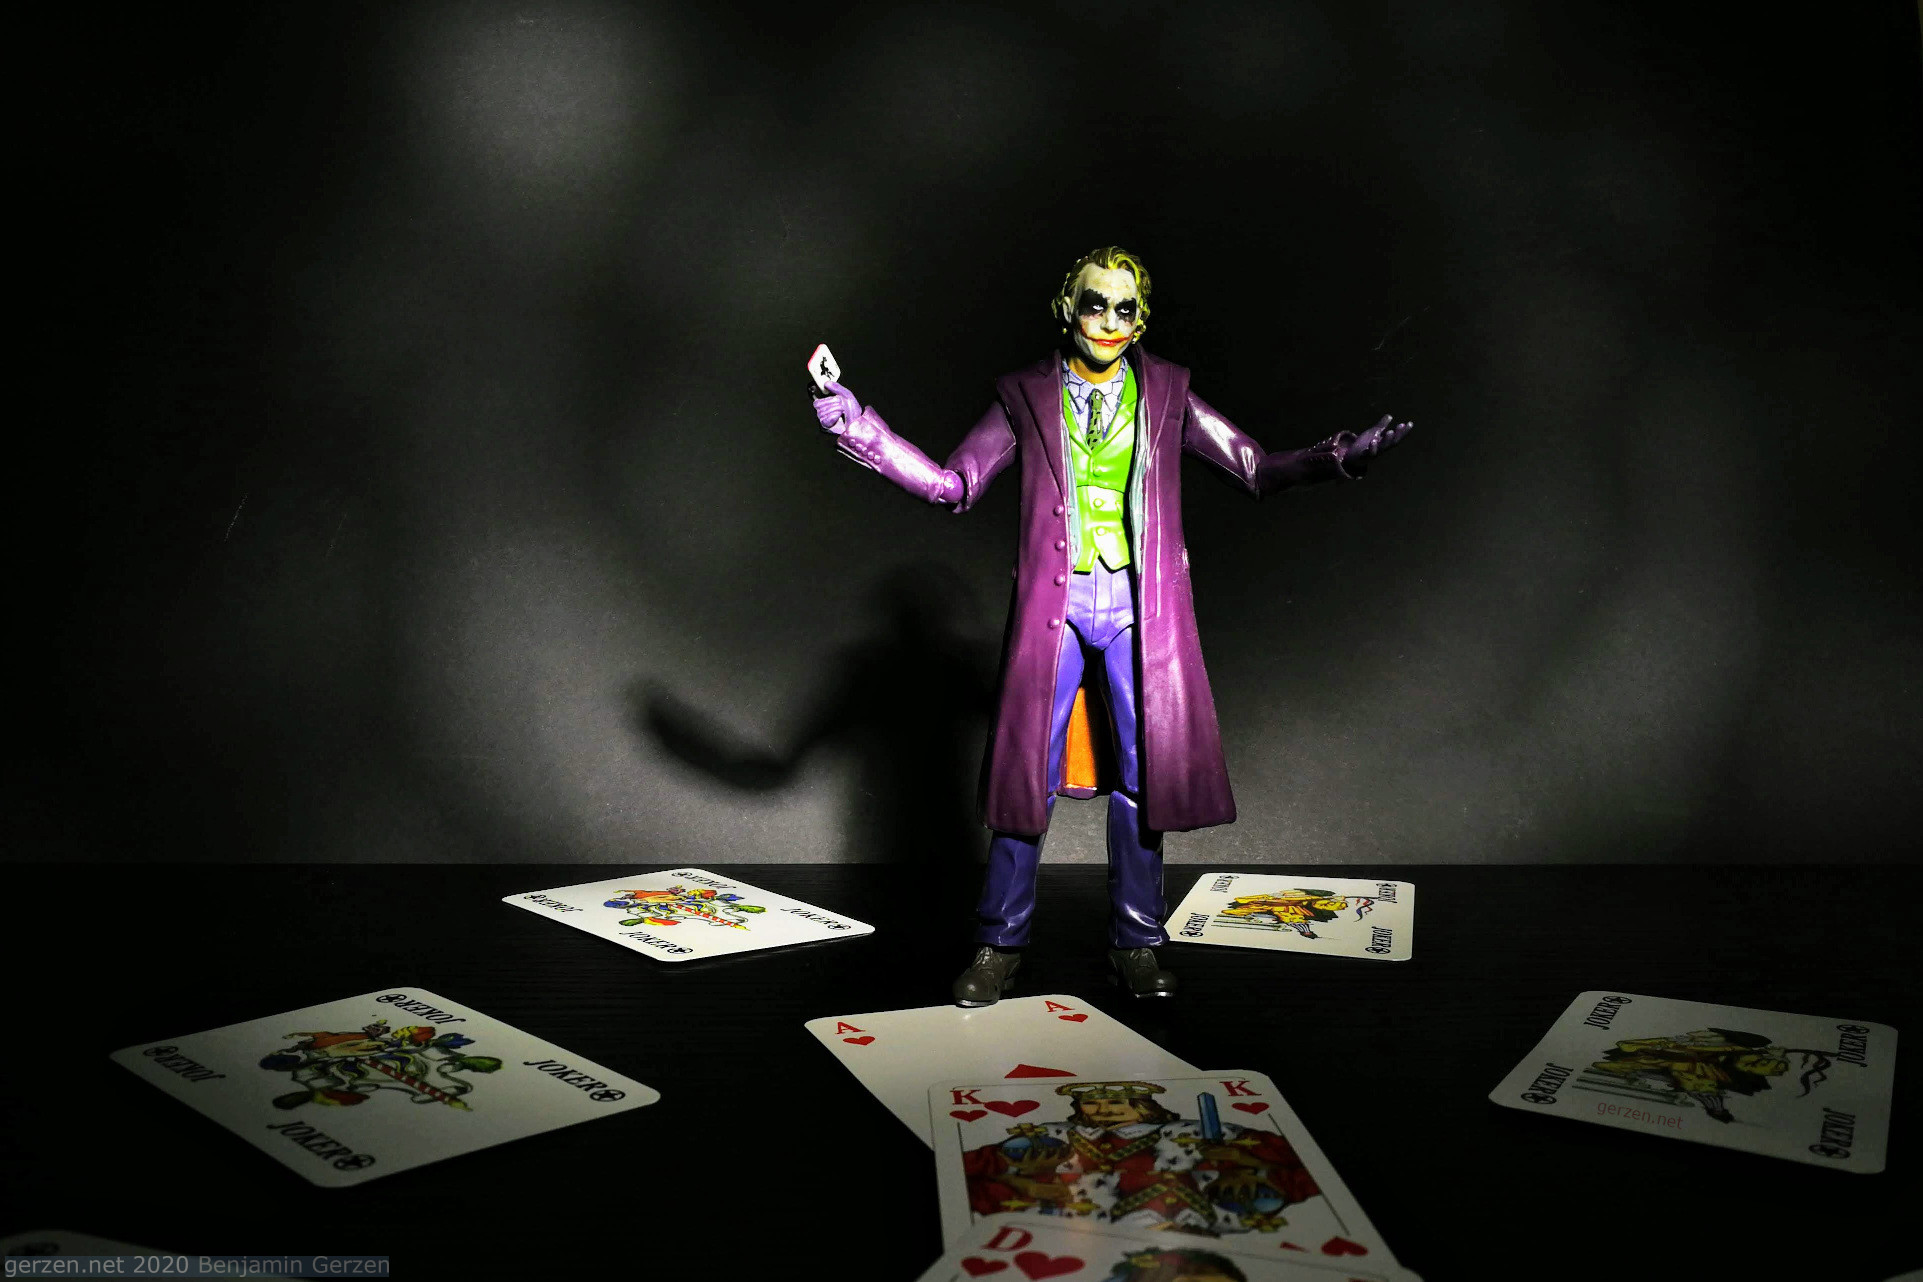 Joker action figure wit cards